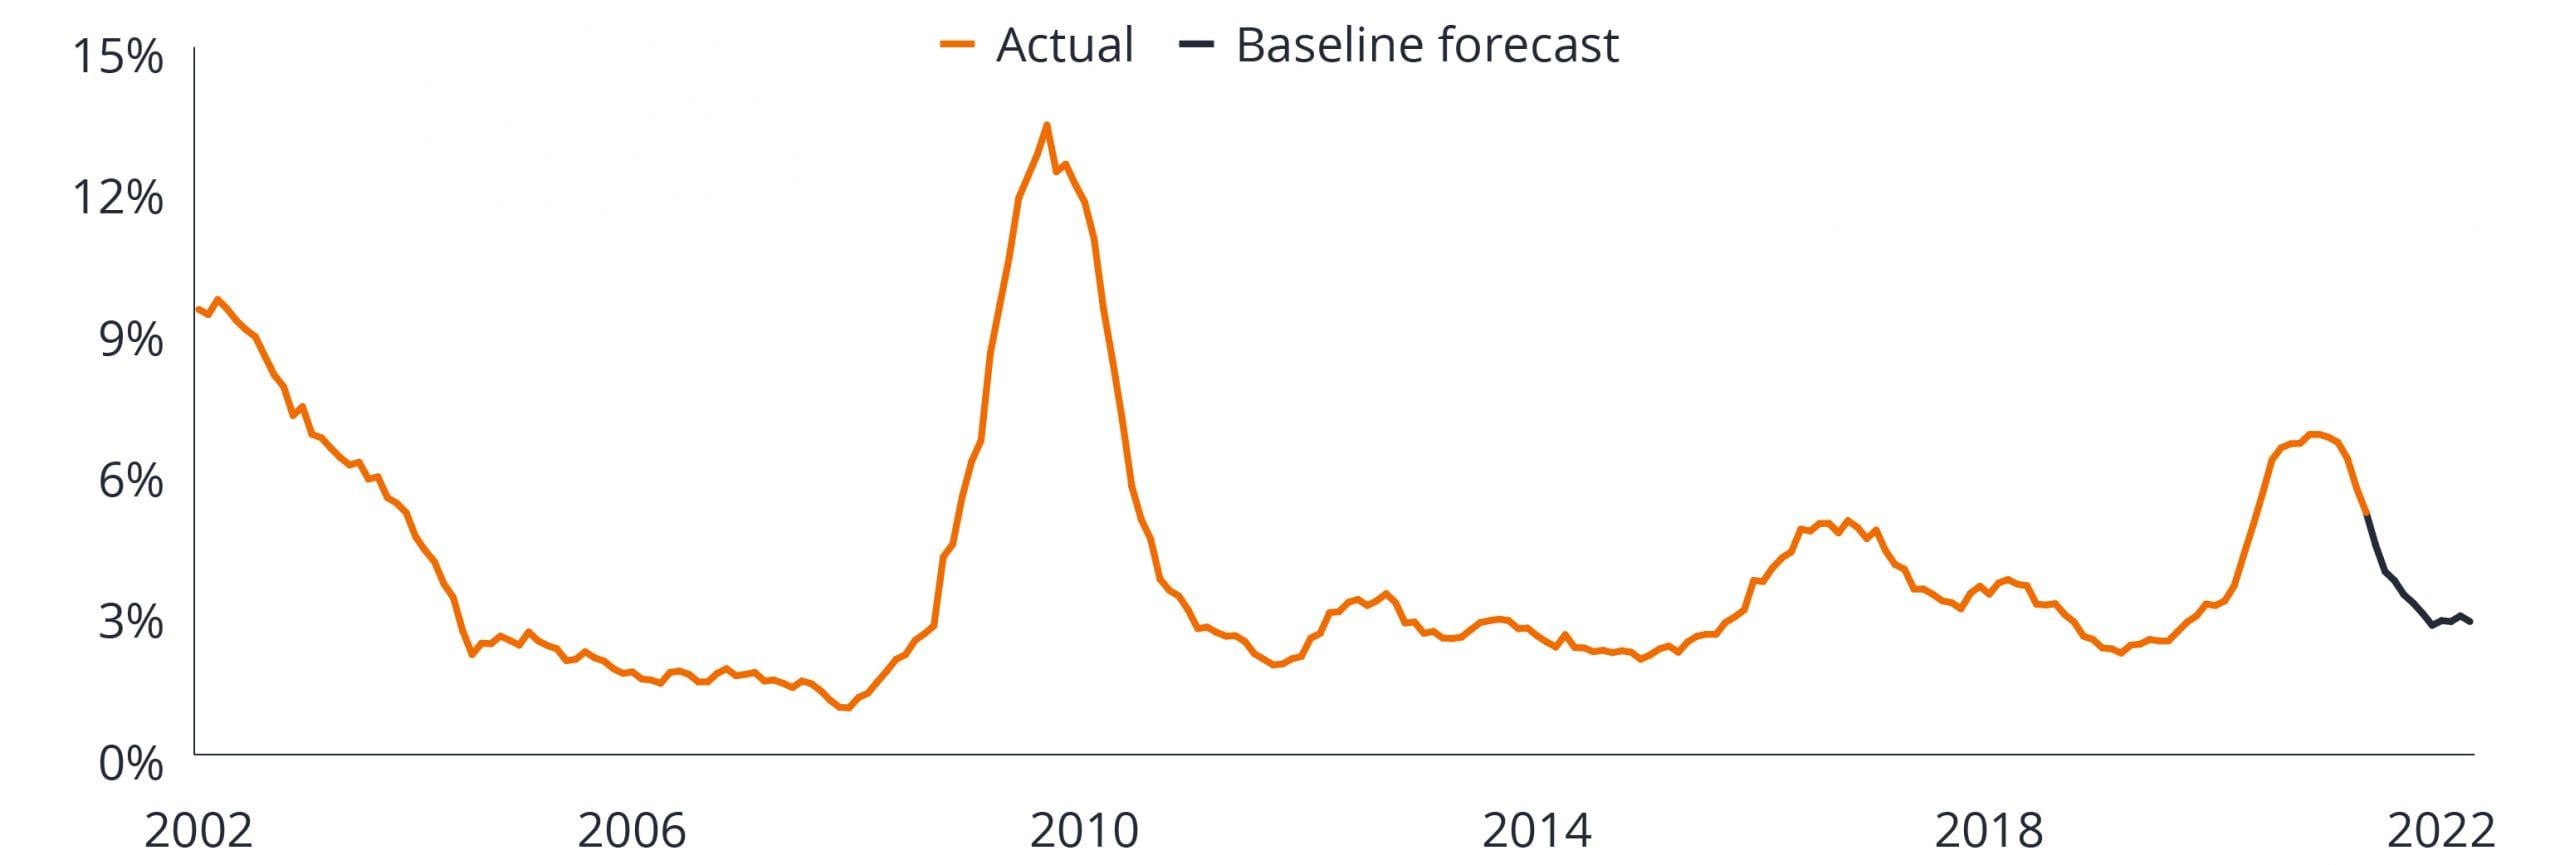 Global speculative-grade default rate, trailing 12 months